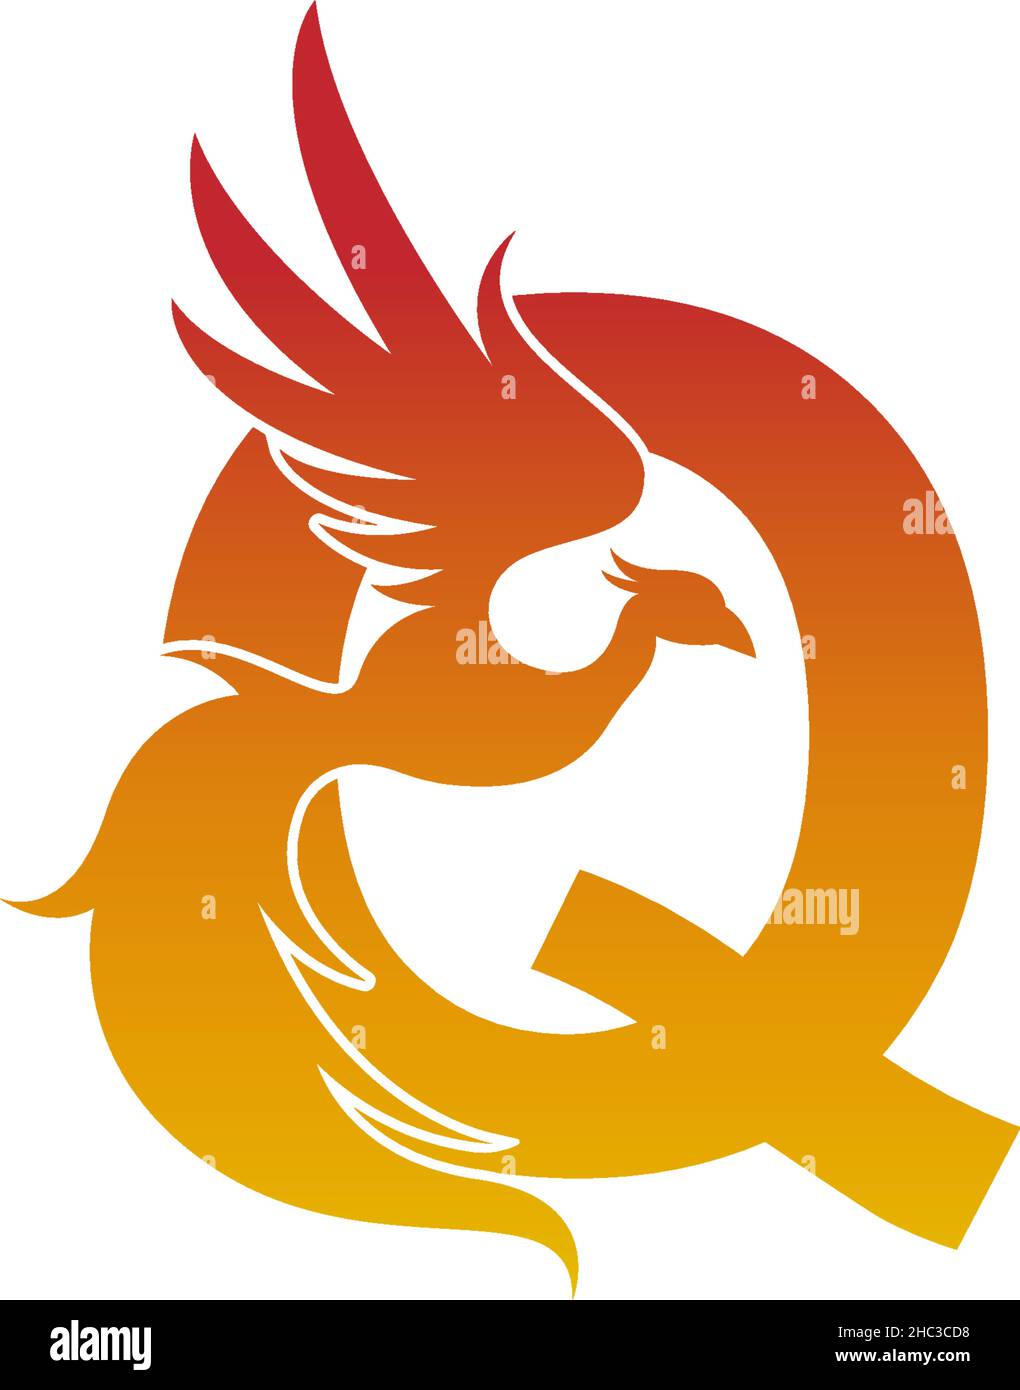 Realistic sport shirt Phoenix Suns, jersey template for basketball kit.  Vector illustration Stock Vector Image & Art - Alamy